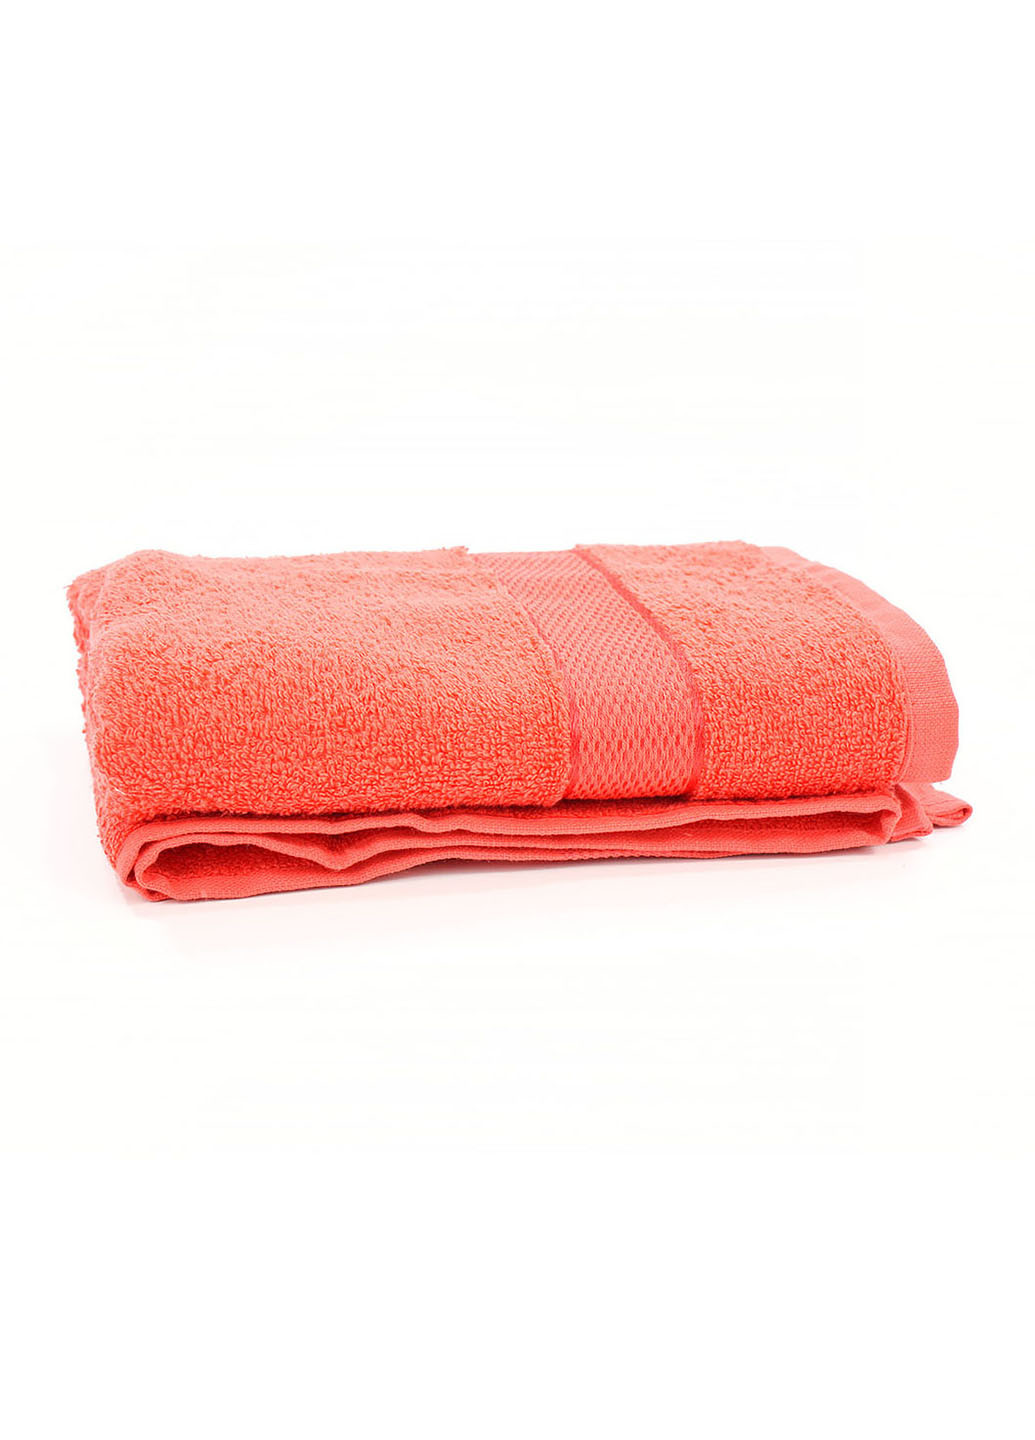 Еней-Плюс полотенце махровое бс0022 70х140 розовый производство - Украина